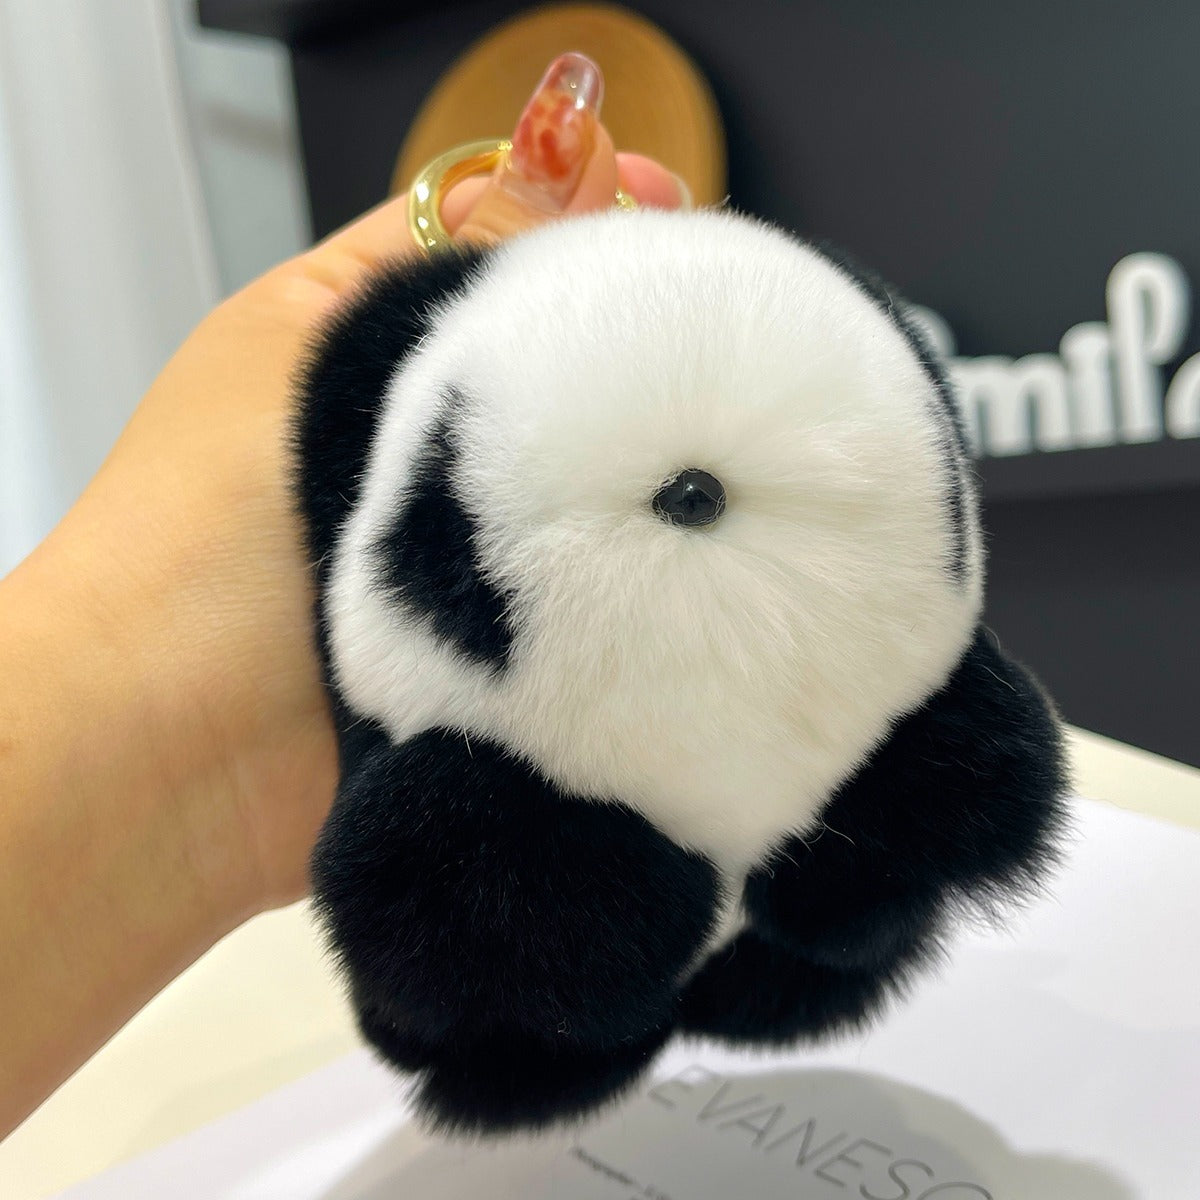 Milk fur panda decorative keychain